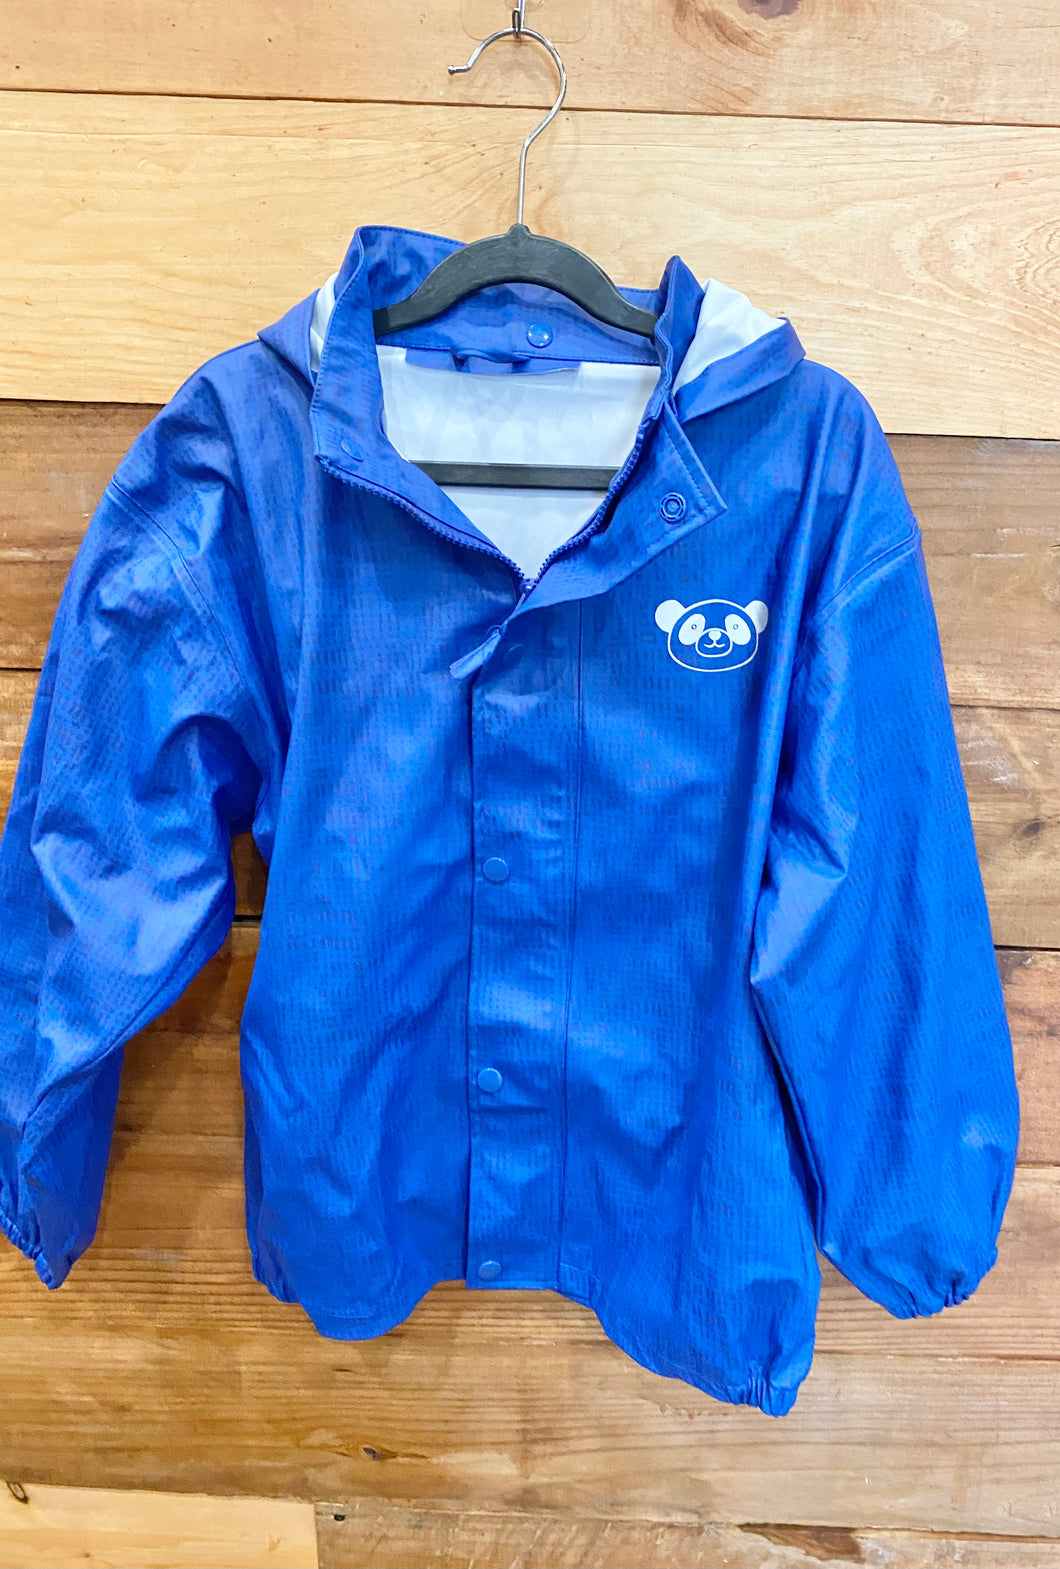 Bogi Blue Rain Jacket Size 7-8Y